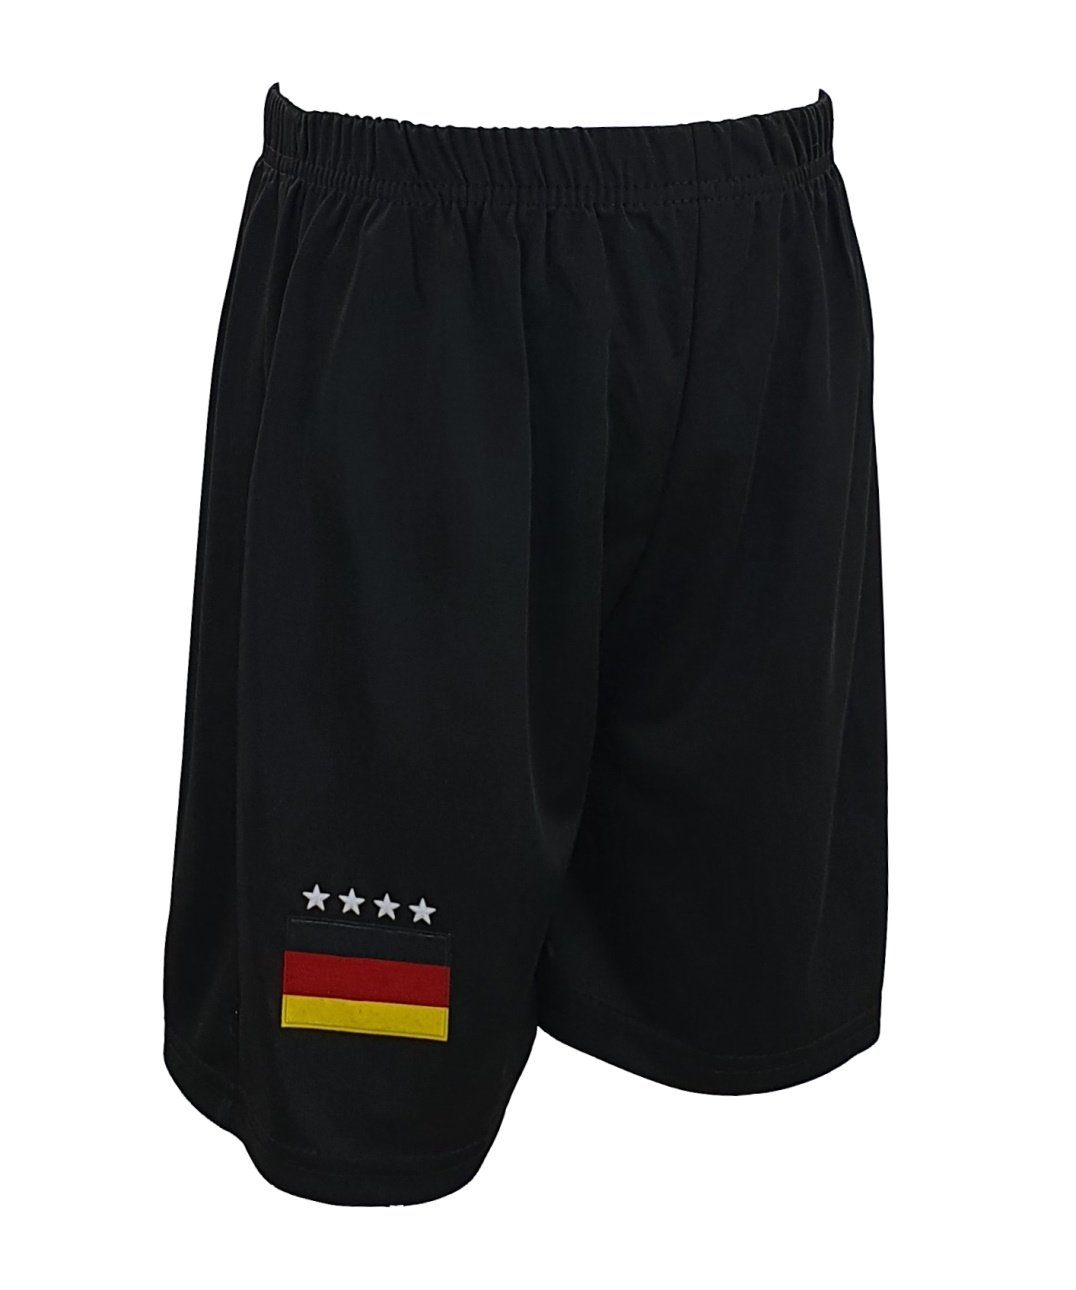 (Set) Weiß Boy Set Germany Fussball Fan Shorts, gestreift Deutschland Fußballtrikot Fashion Trikot JS130 +